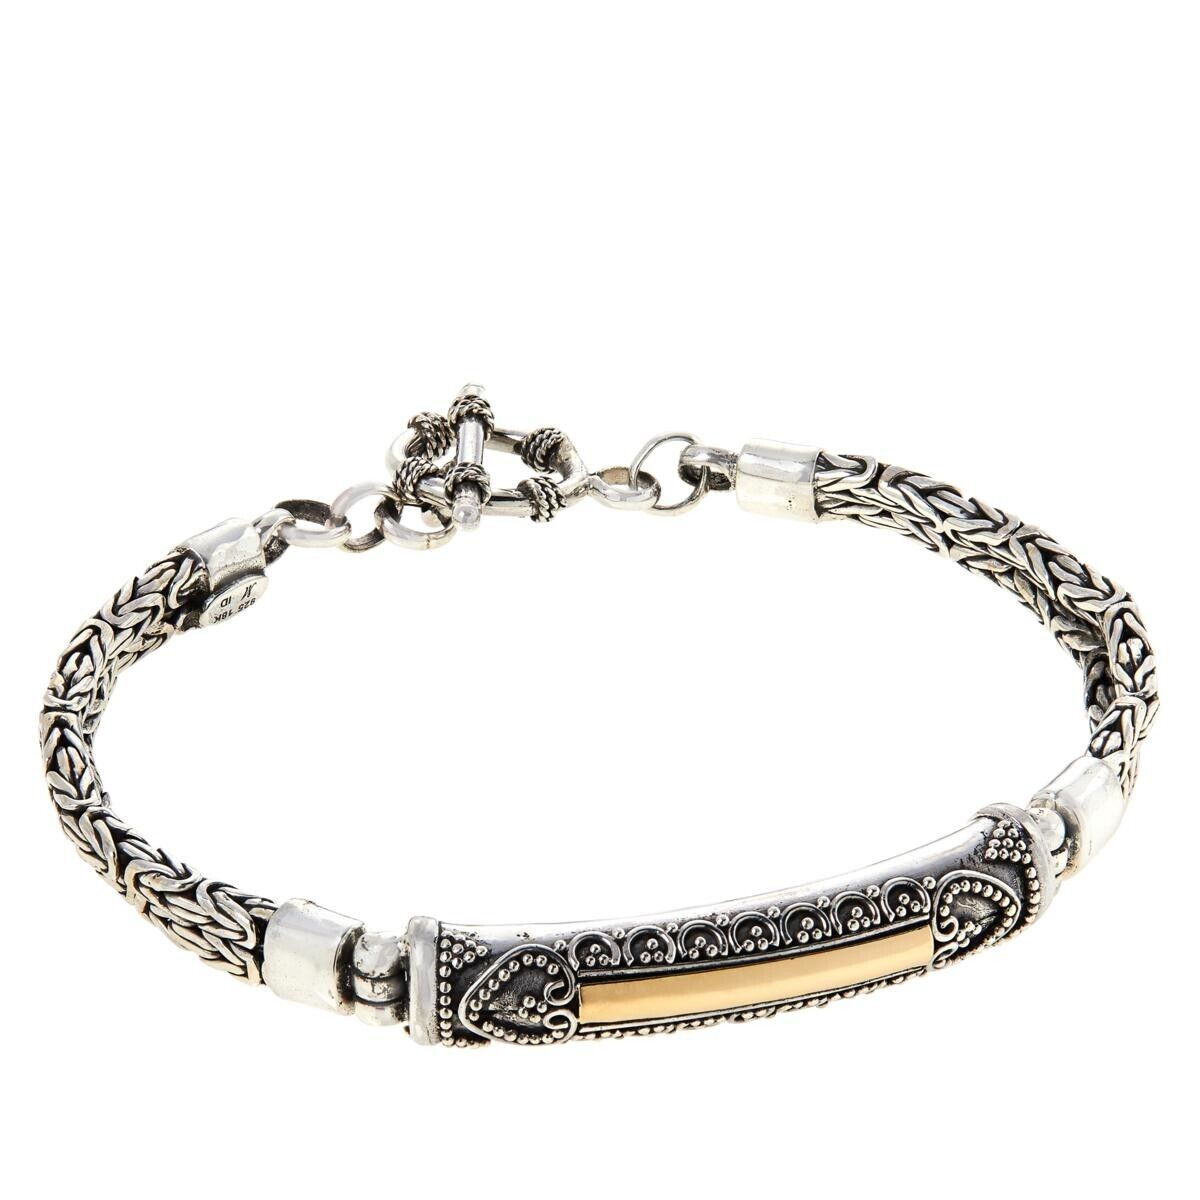 Bali RoManse Sterling Silver and 18K Byzantine Chain Bar Bracelet. 6-3/4"